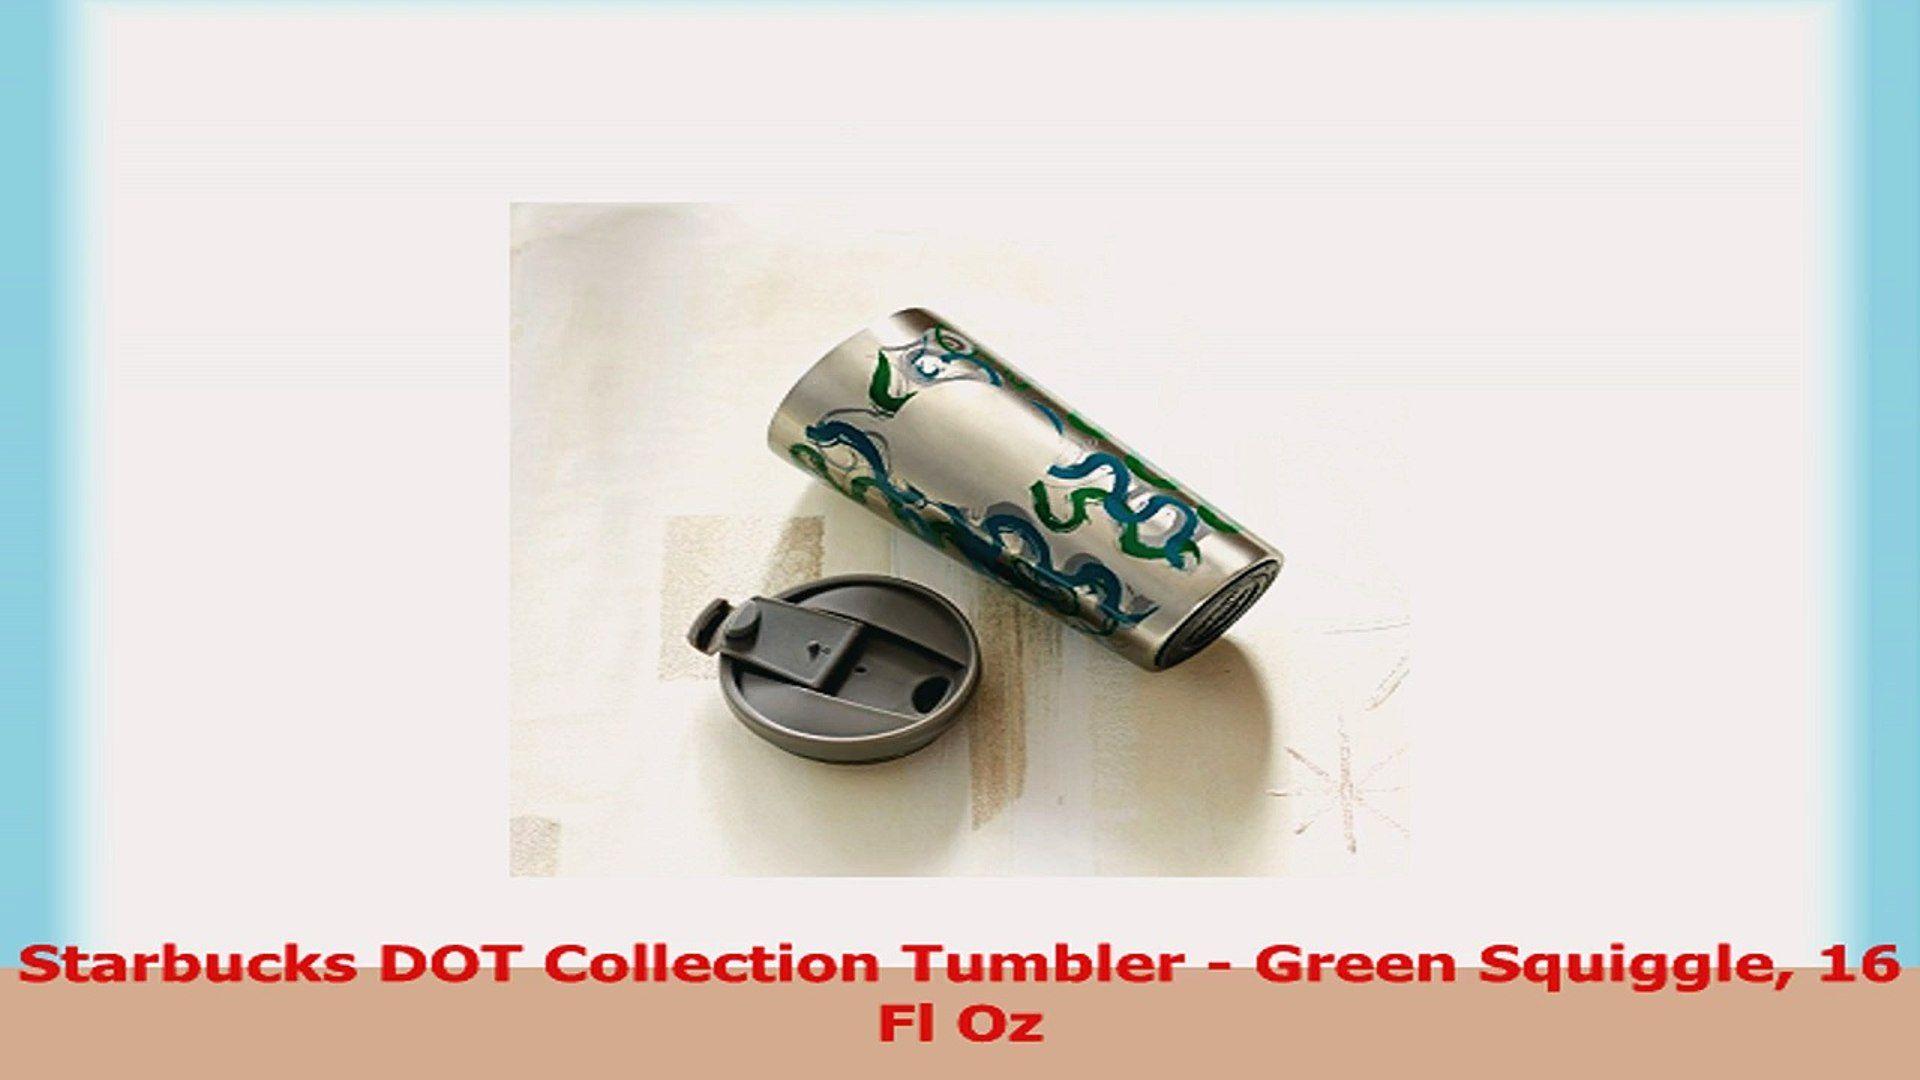 Green Squiggle Logo - Starbucks DOT Collection Tumbler Green Squiggle 16 Fl Oz 89d885c1